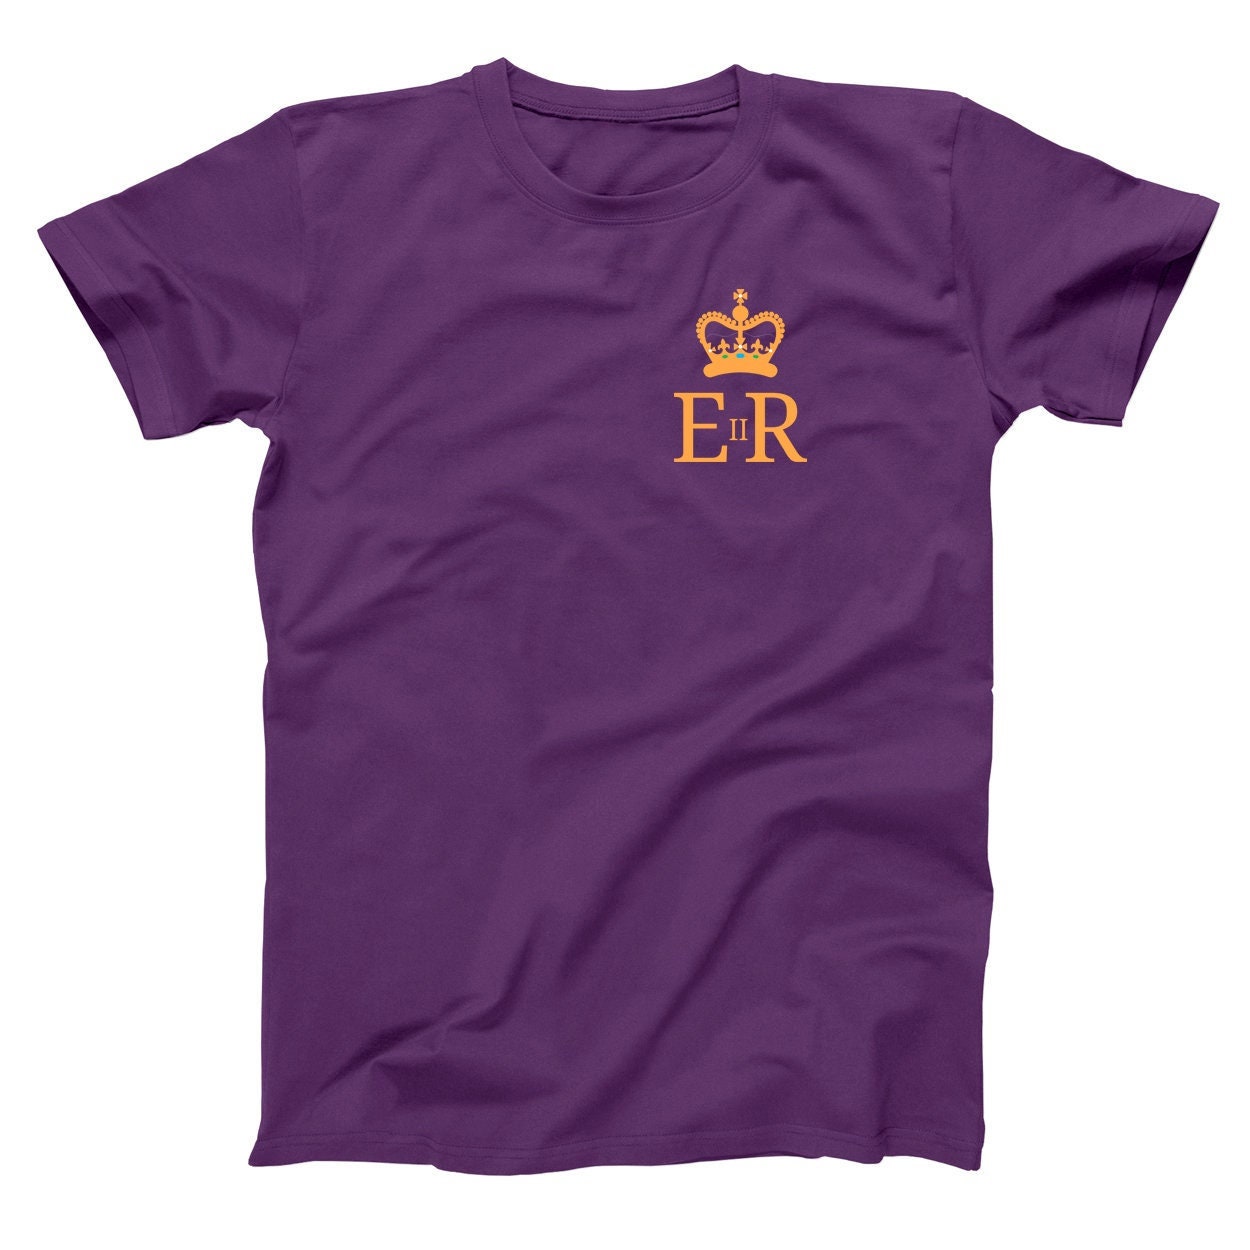 – – Cute The Crown Monarch England Uk British Flag E2r Royal Gold Seal Rip Queen Elizabeth Ii Shirt